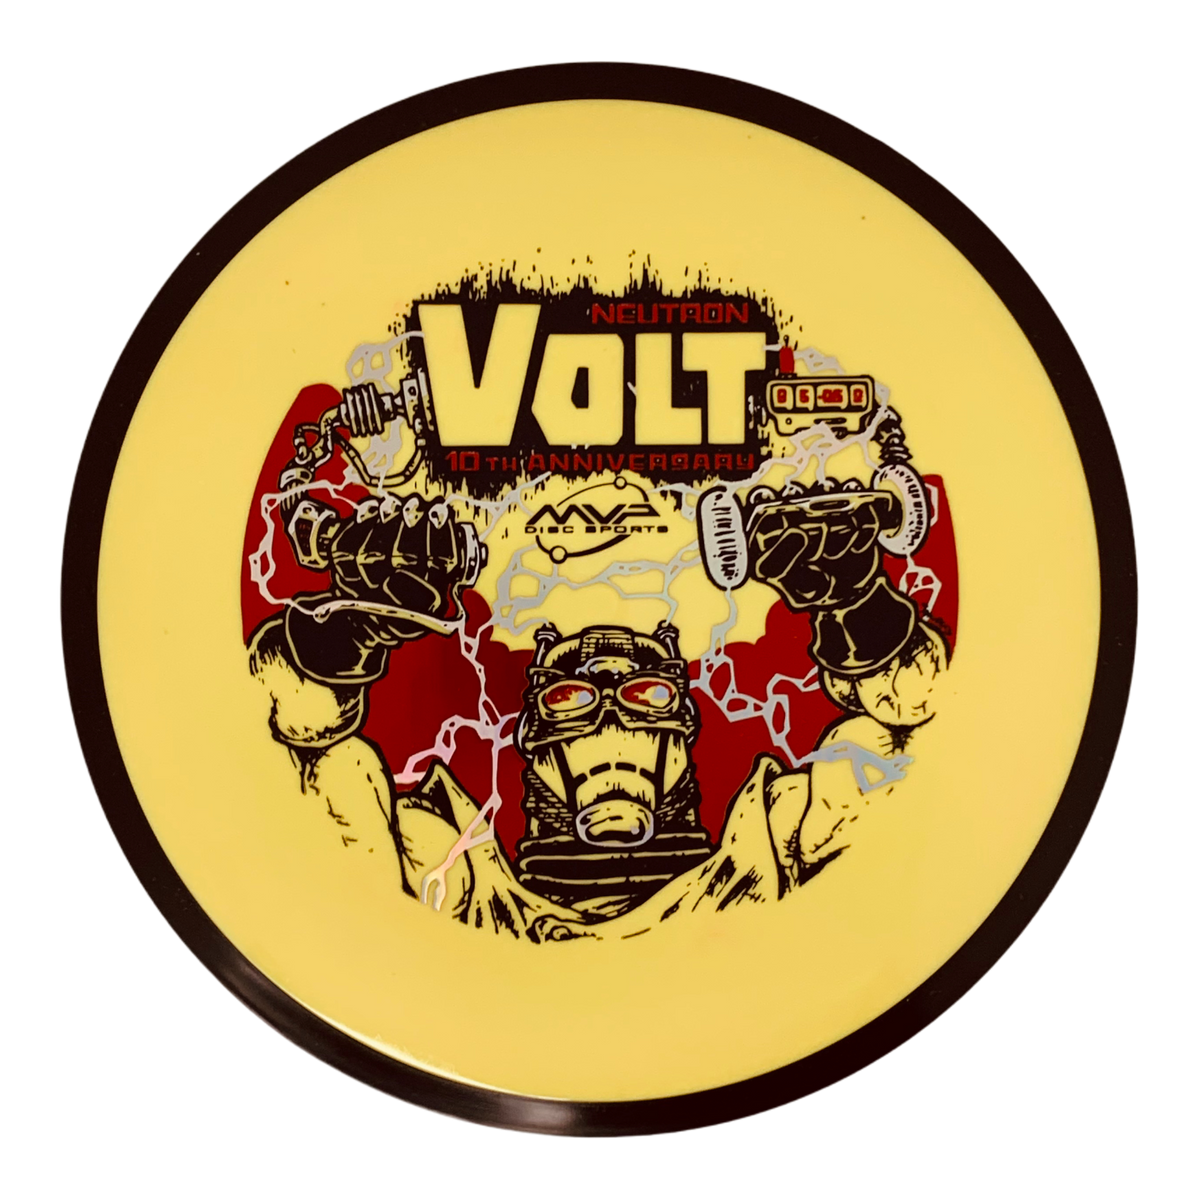 MVP Neutron Volt - 10 Year Anniversary Special Edition